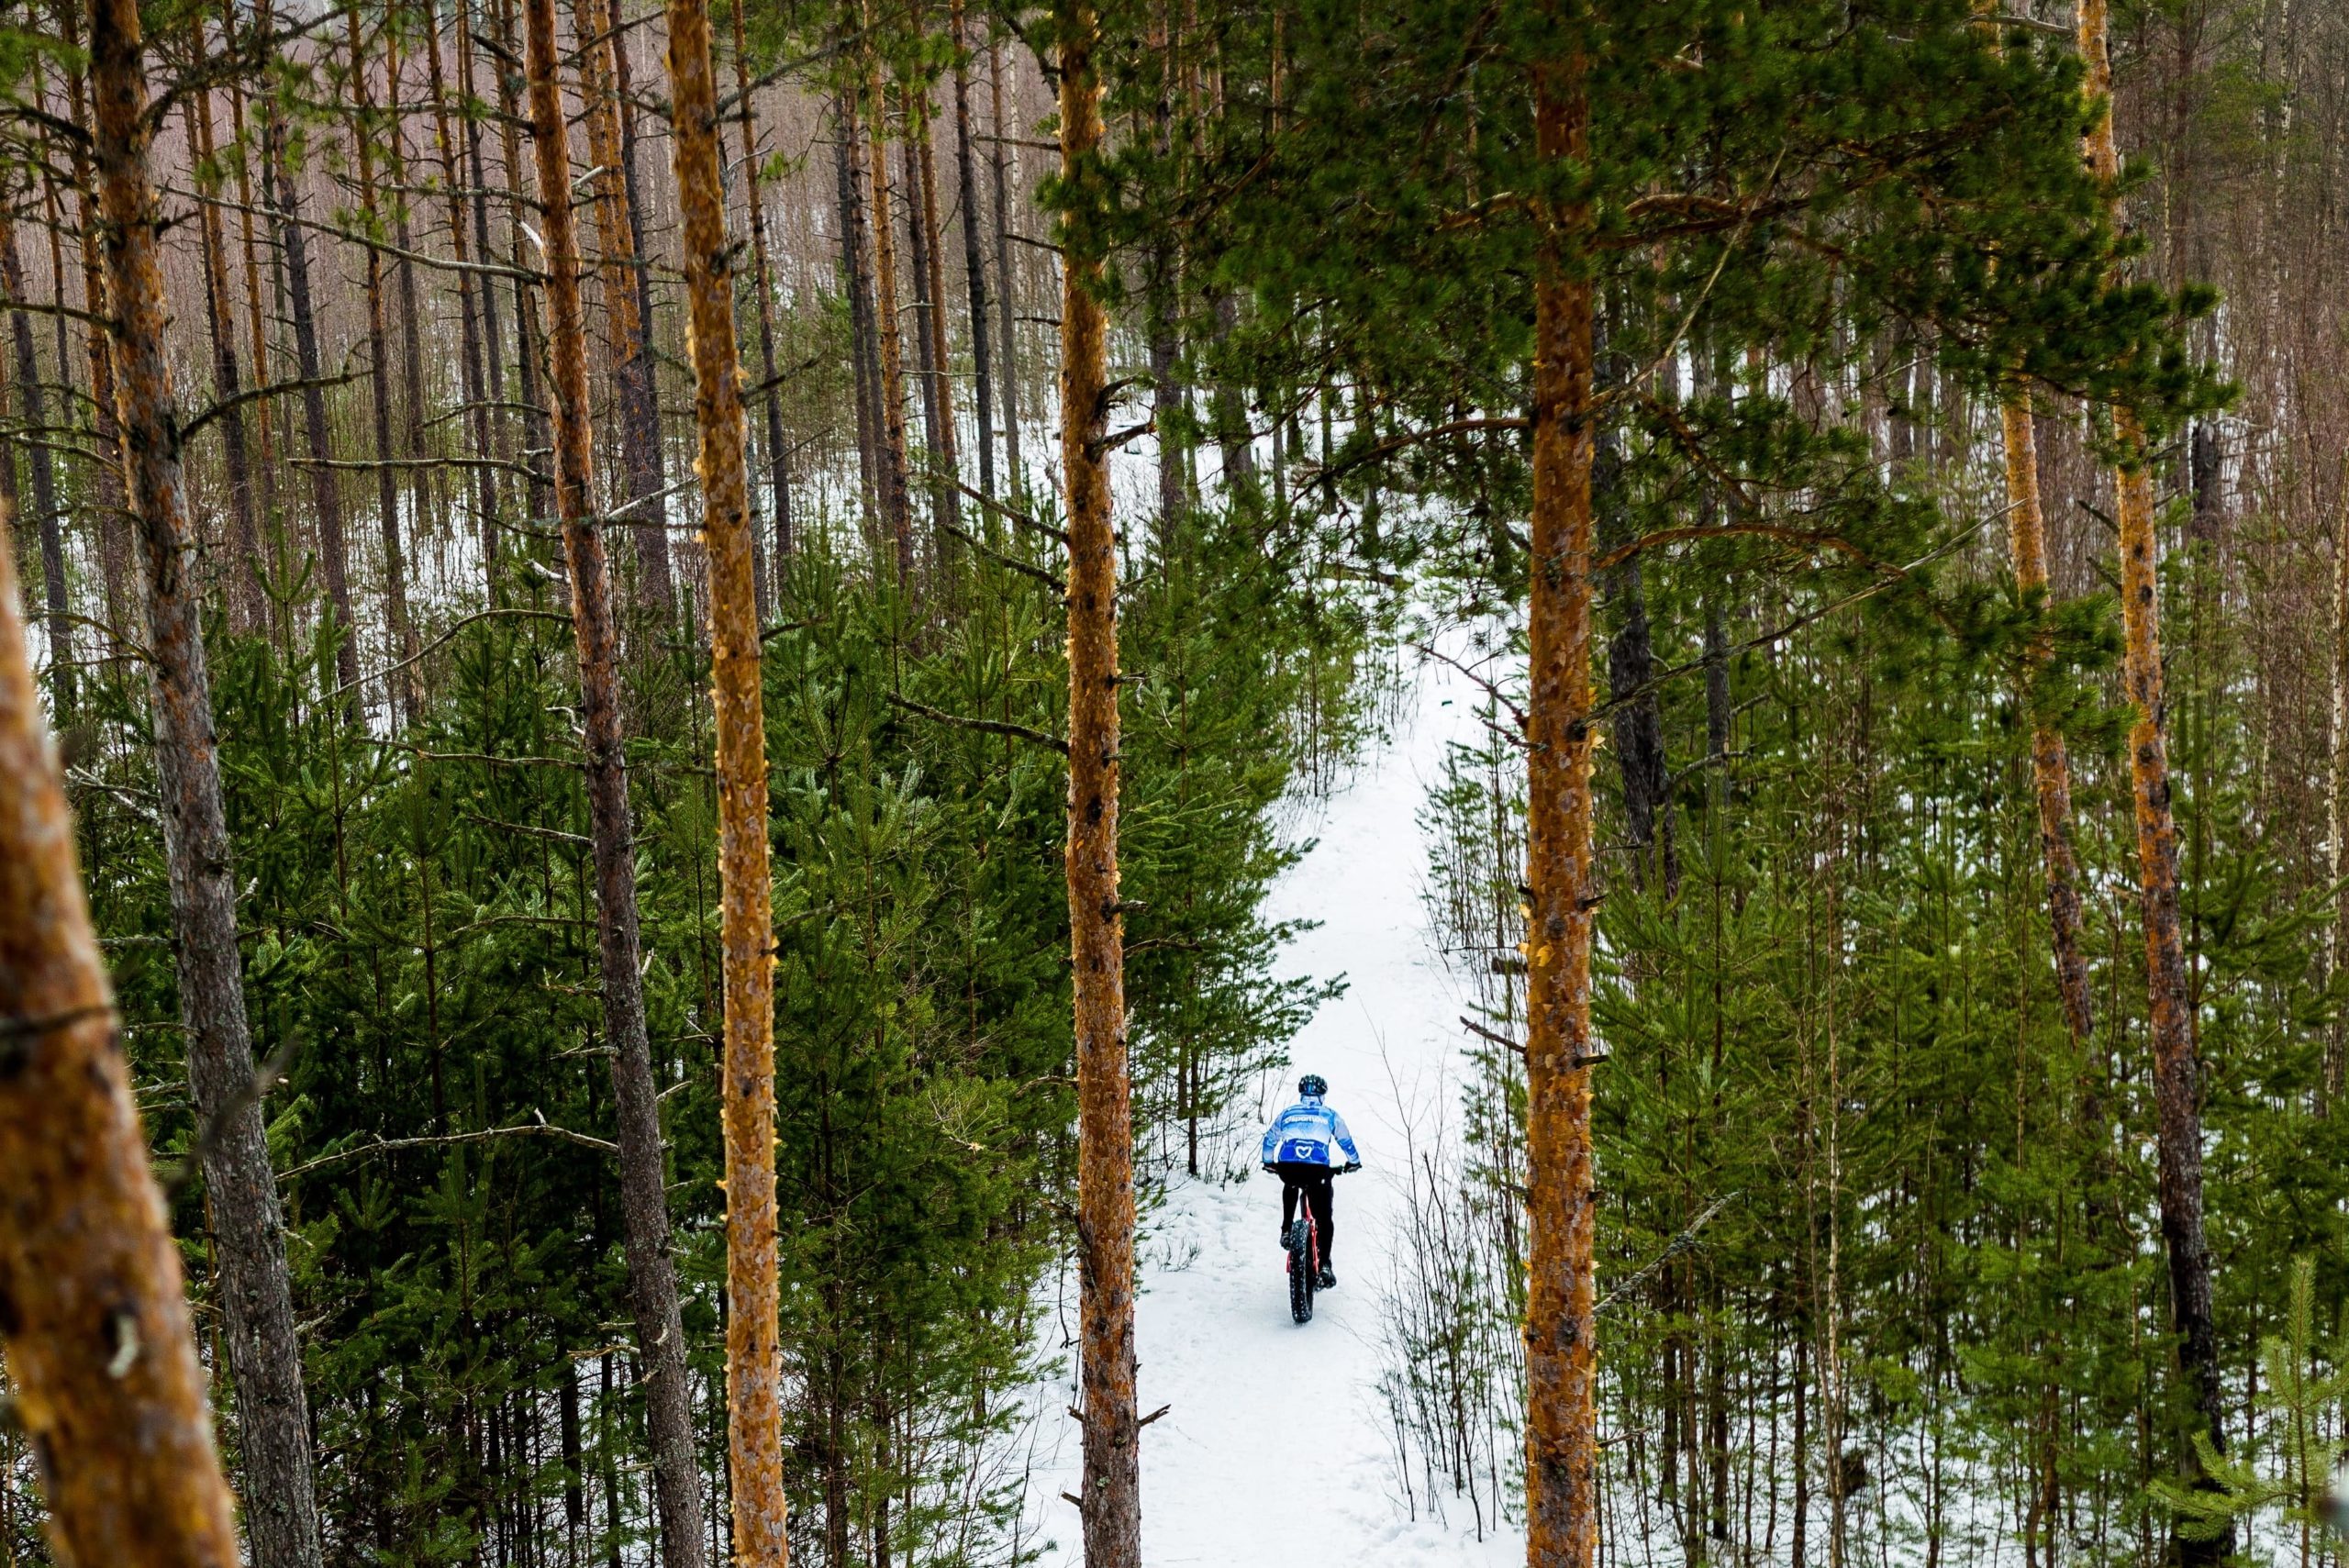 A fat biker rides over a snowy trail through a forest.